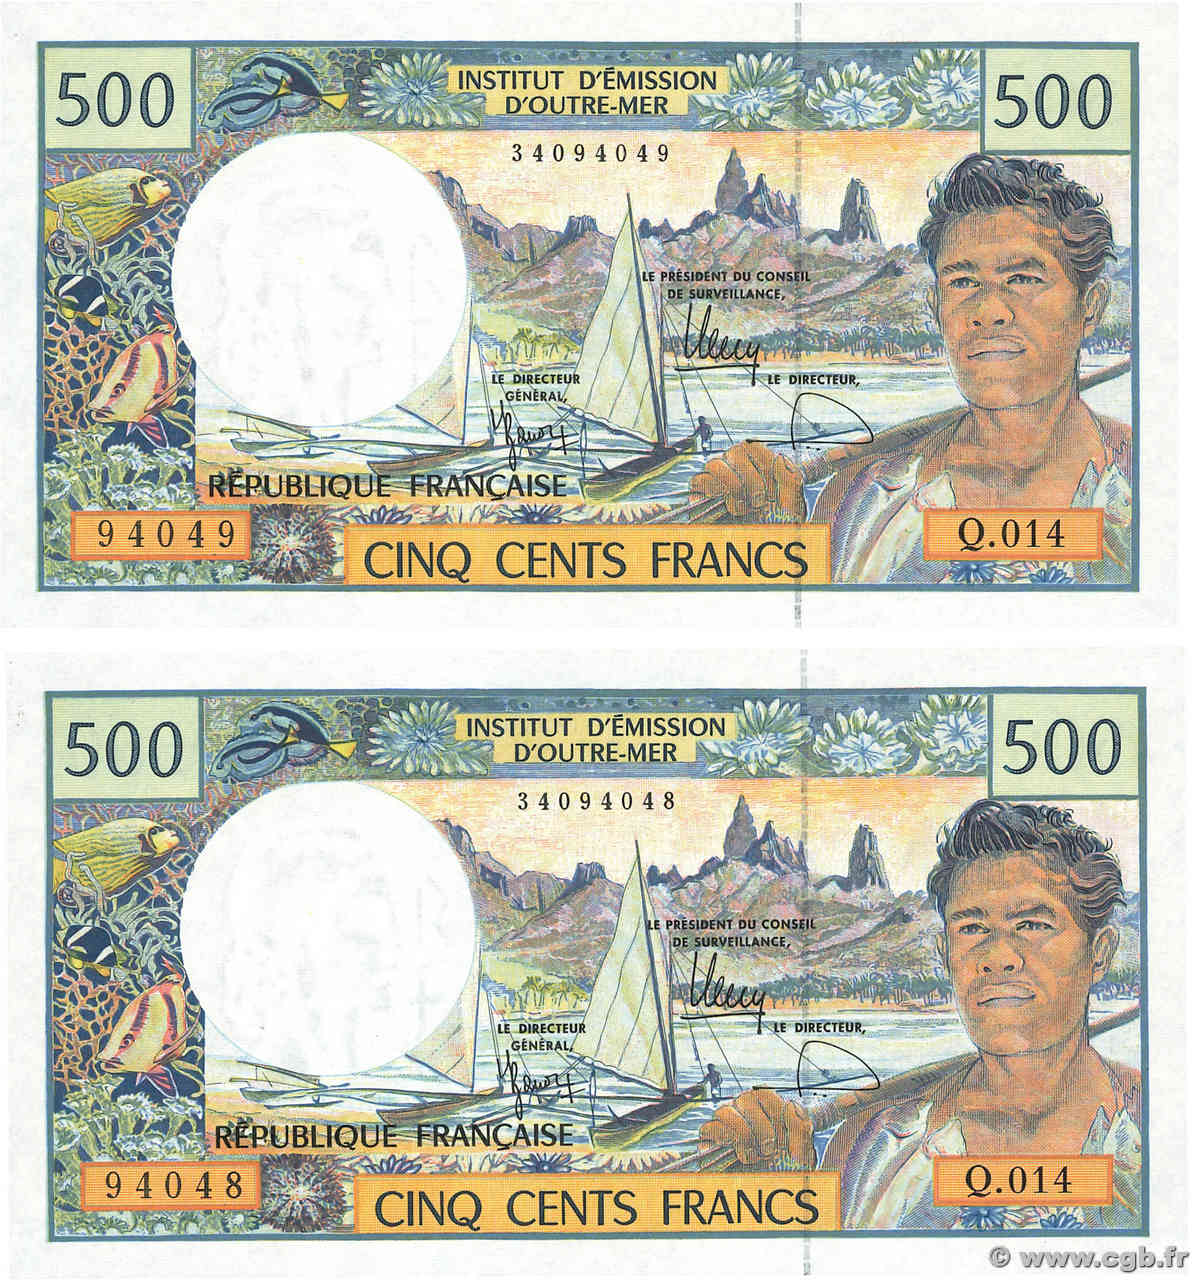 500 Francs Consécutifs FRENCH PACIFIC TERRITORIES  2000 P.01g q.FDC